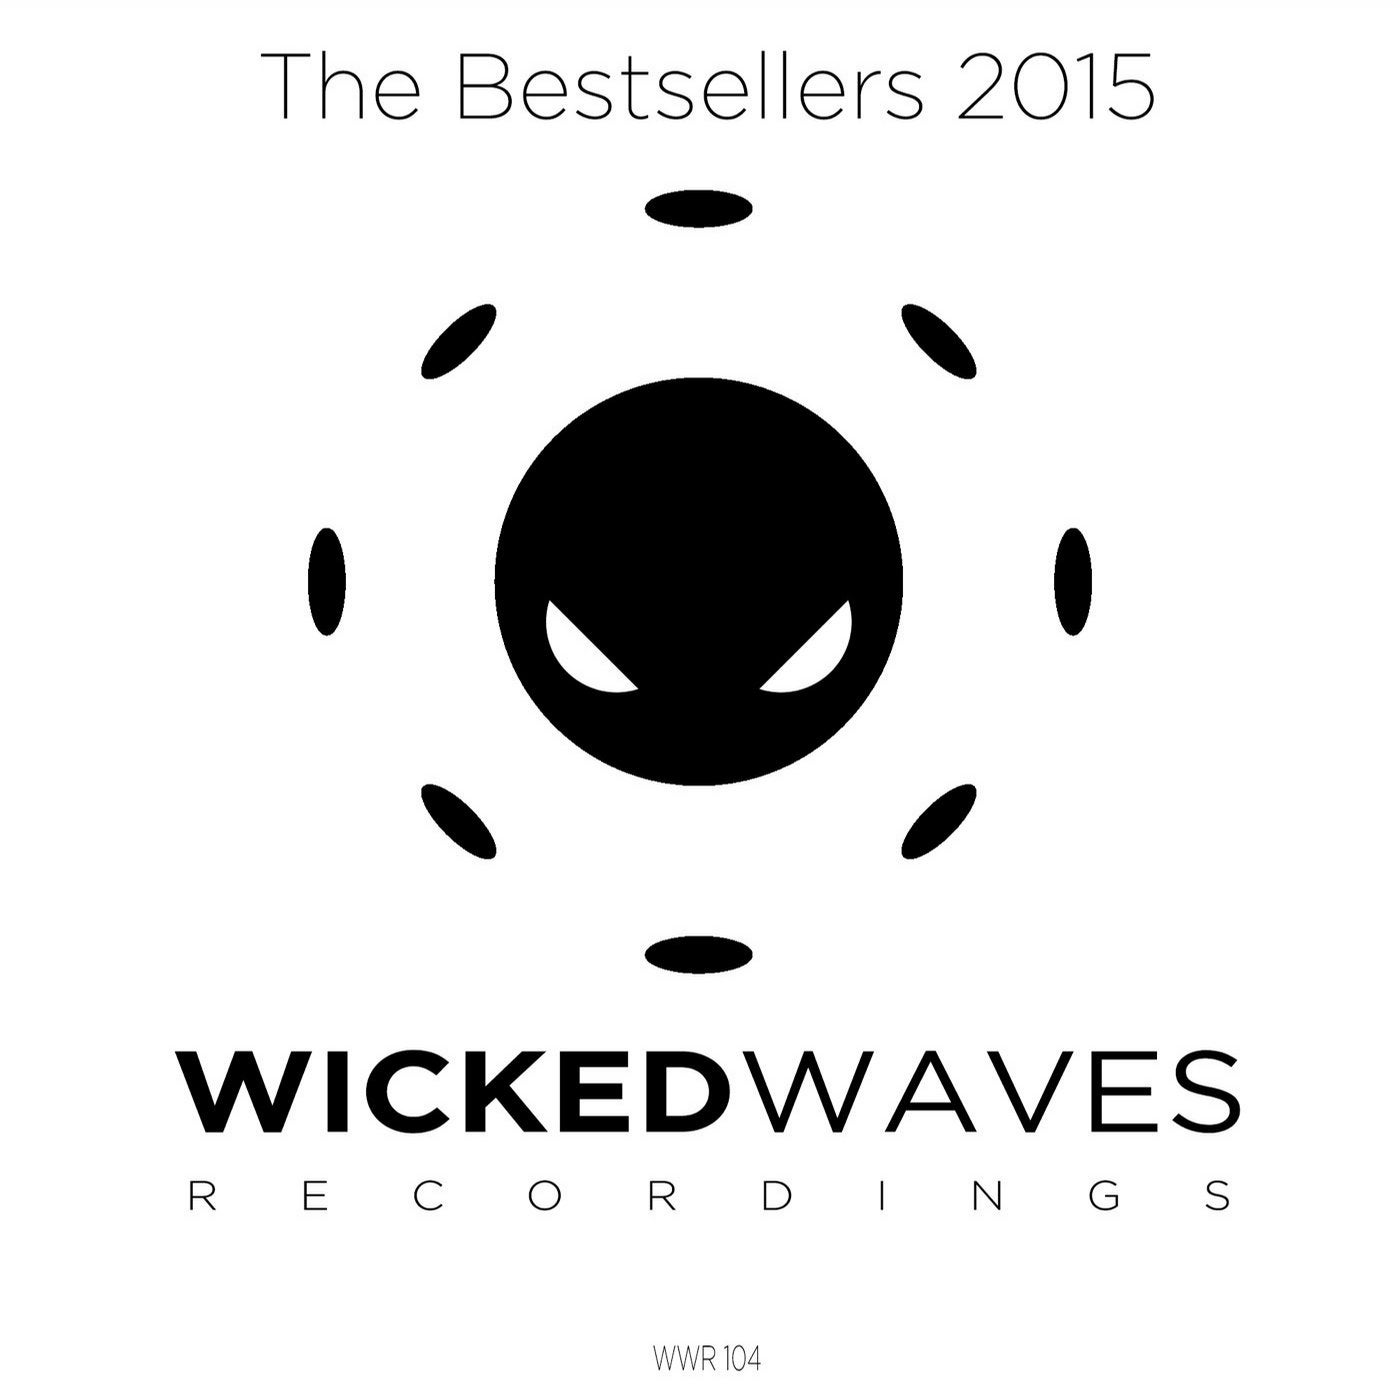 The Bestsellers 2015